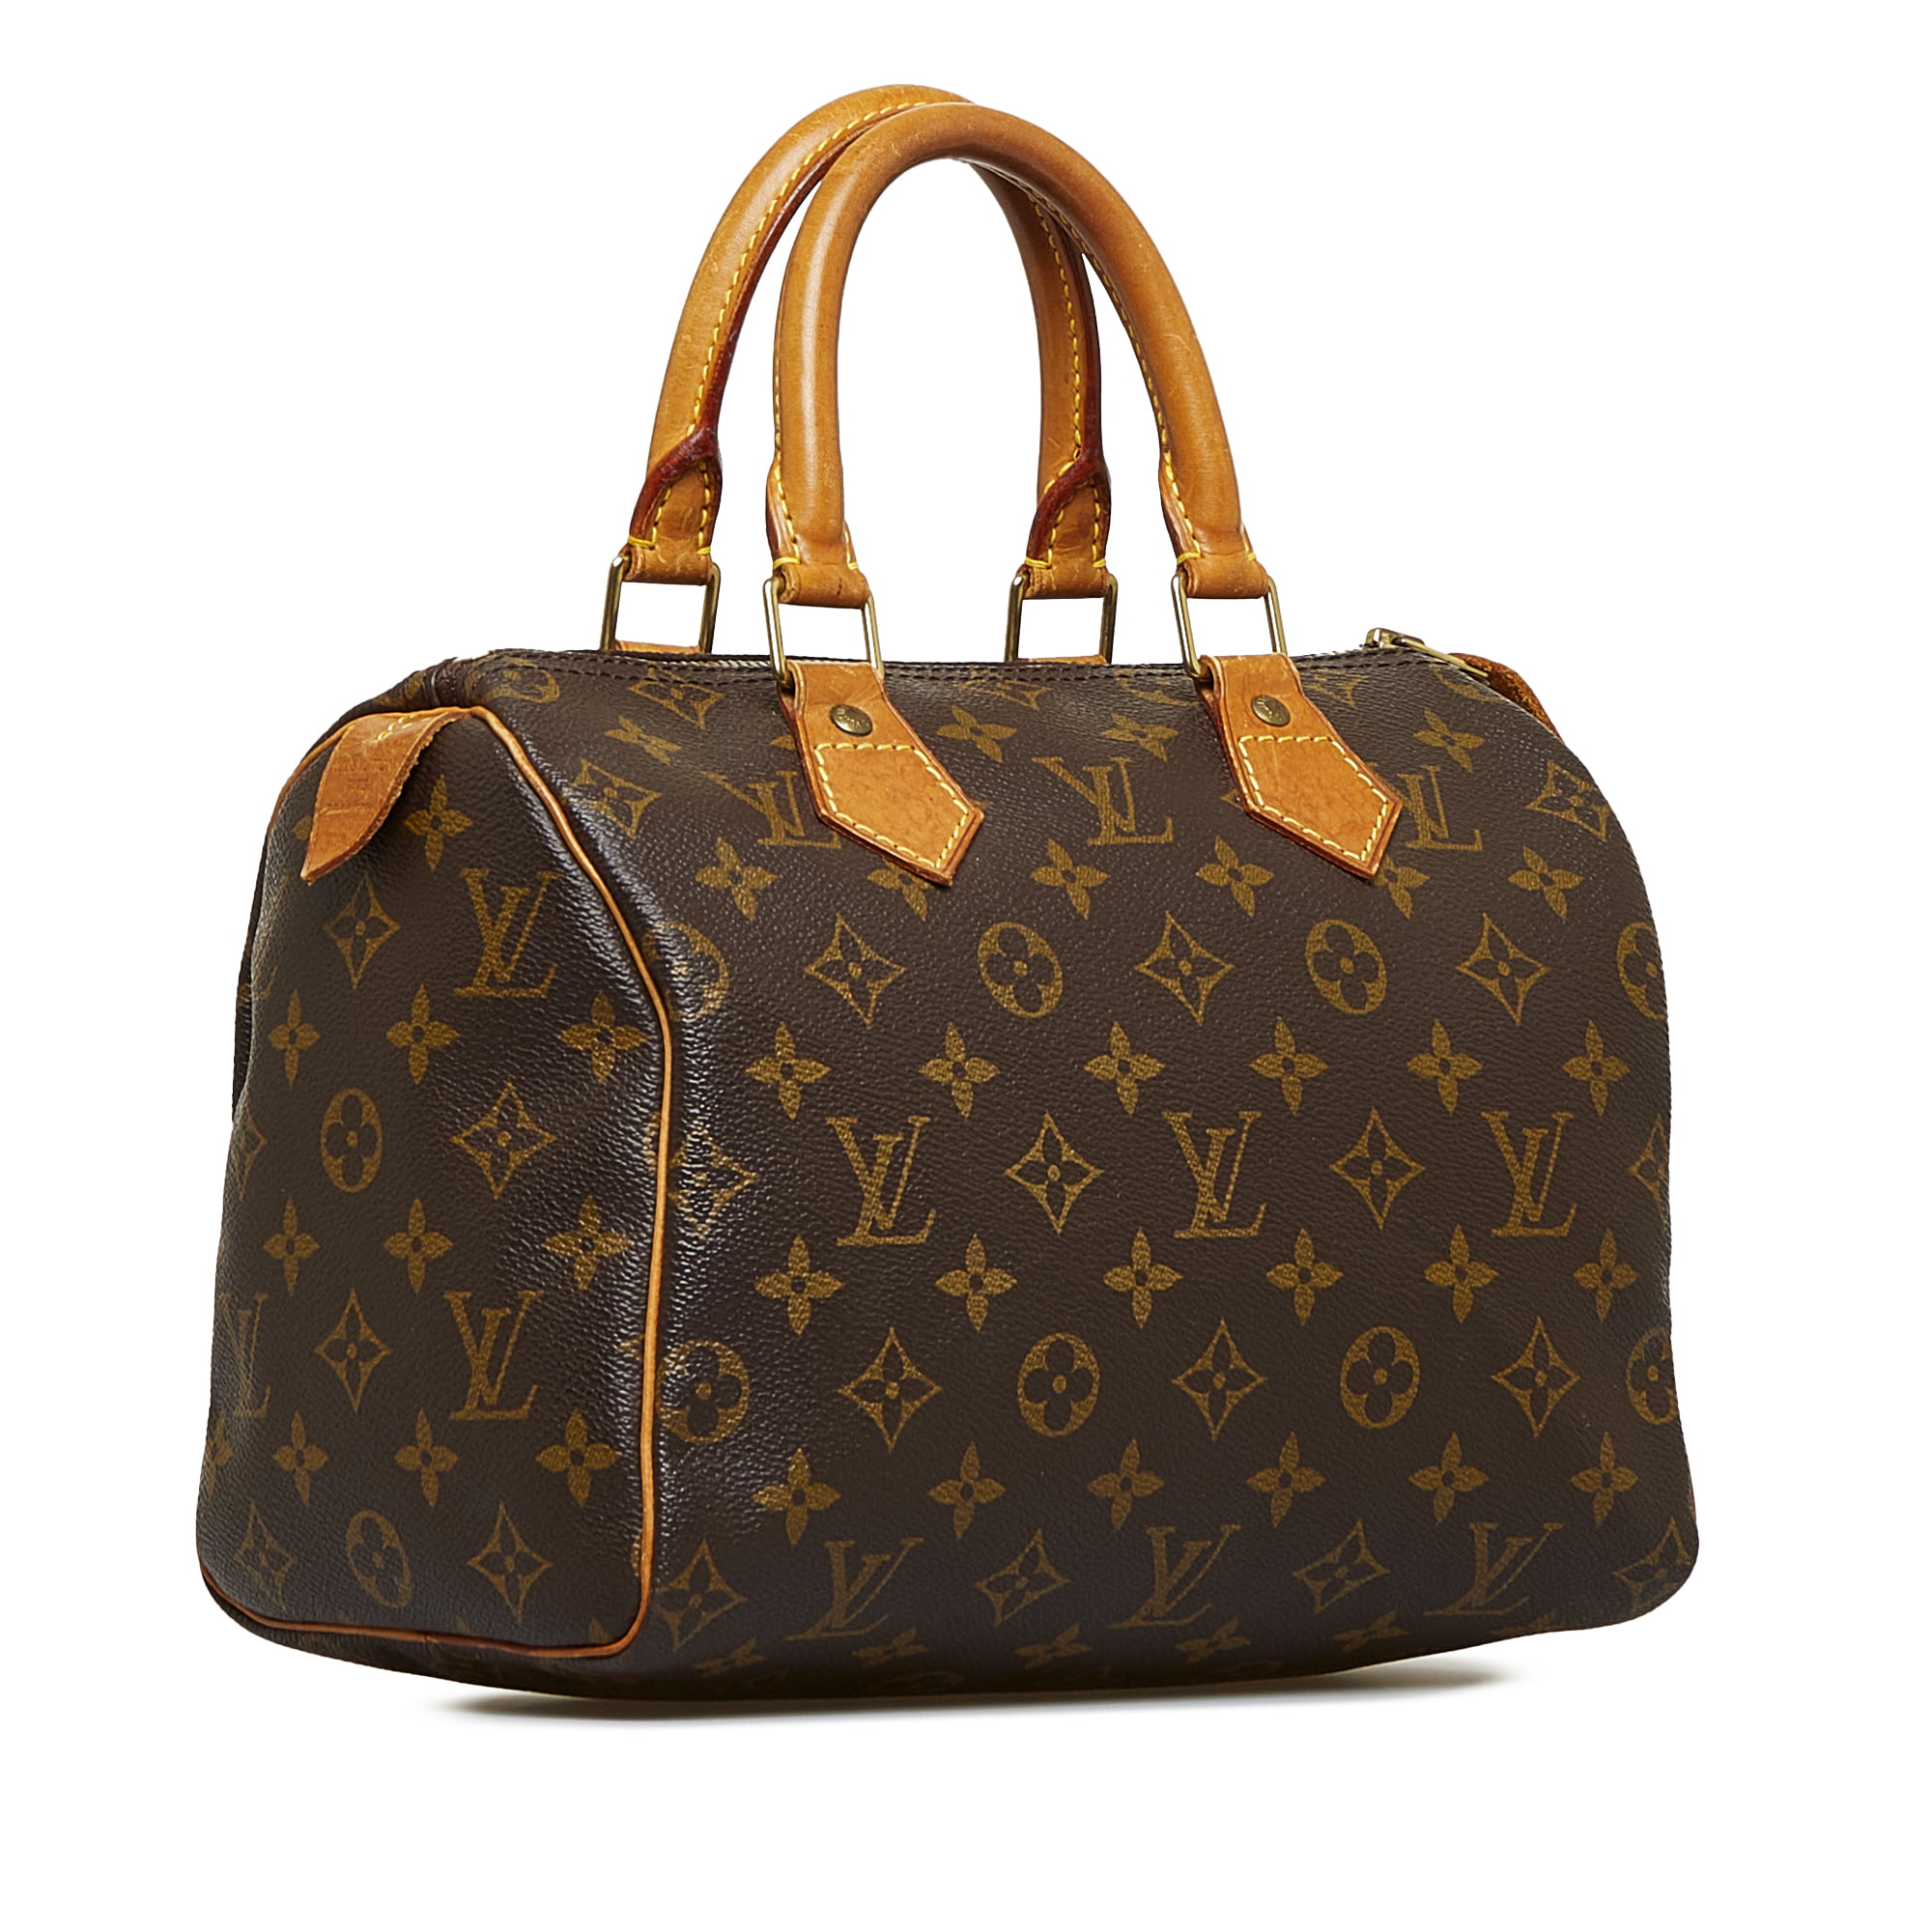 LOUIS VUITTON Speedy 25 Handbag mini boston bag M41528｜Product